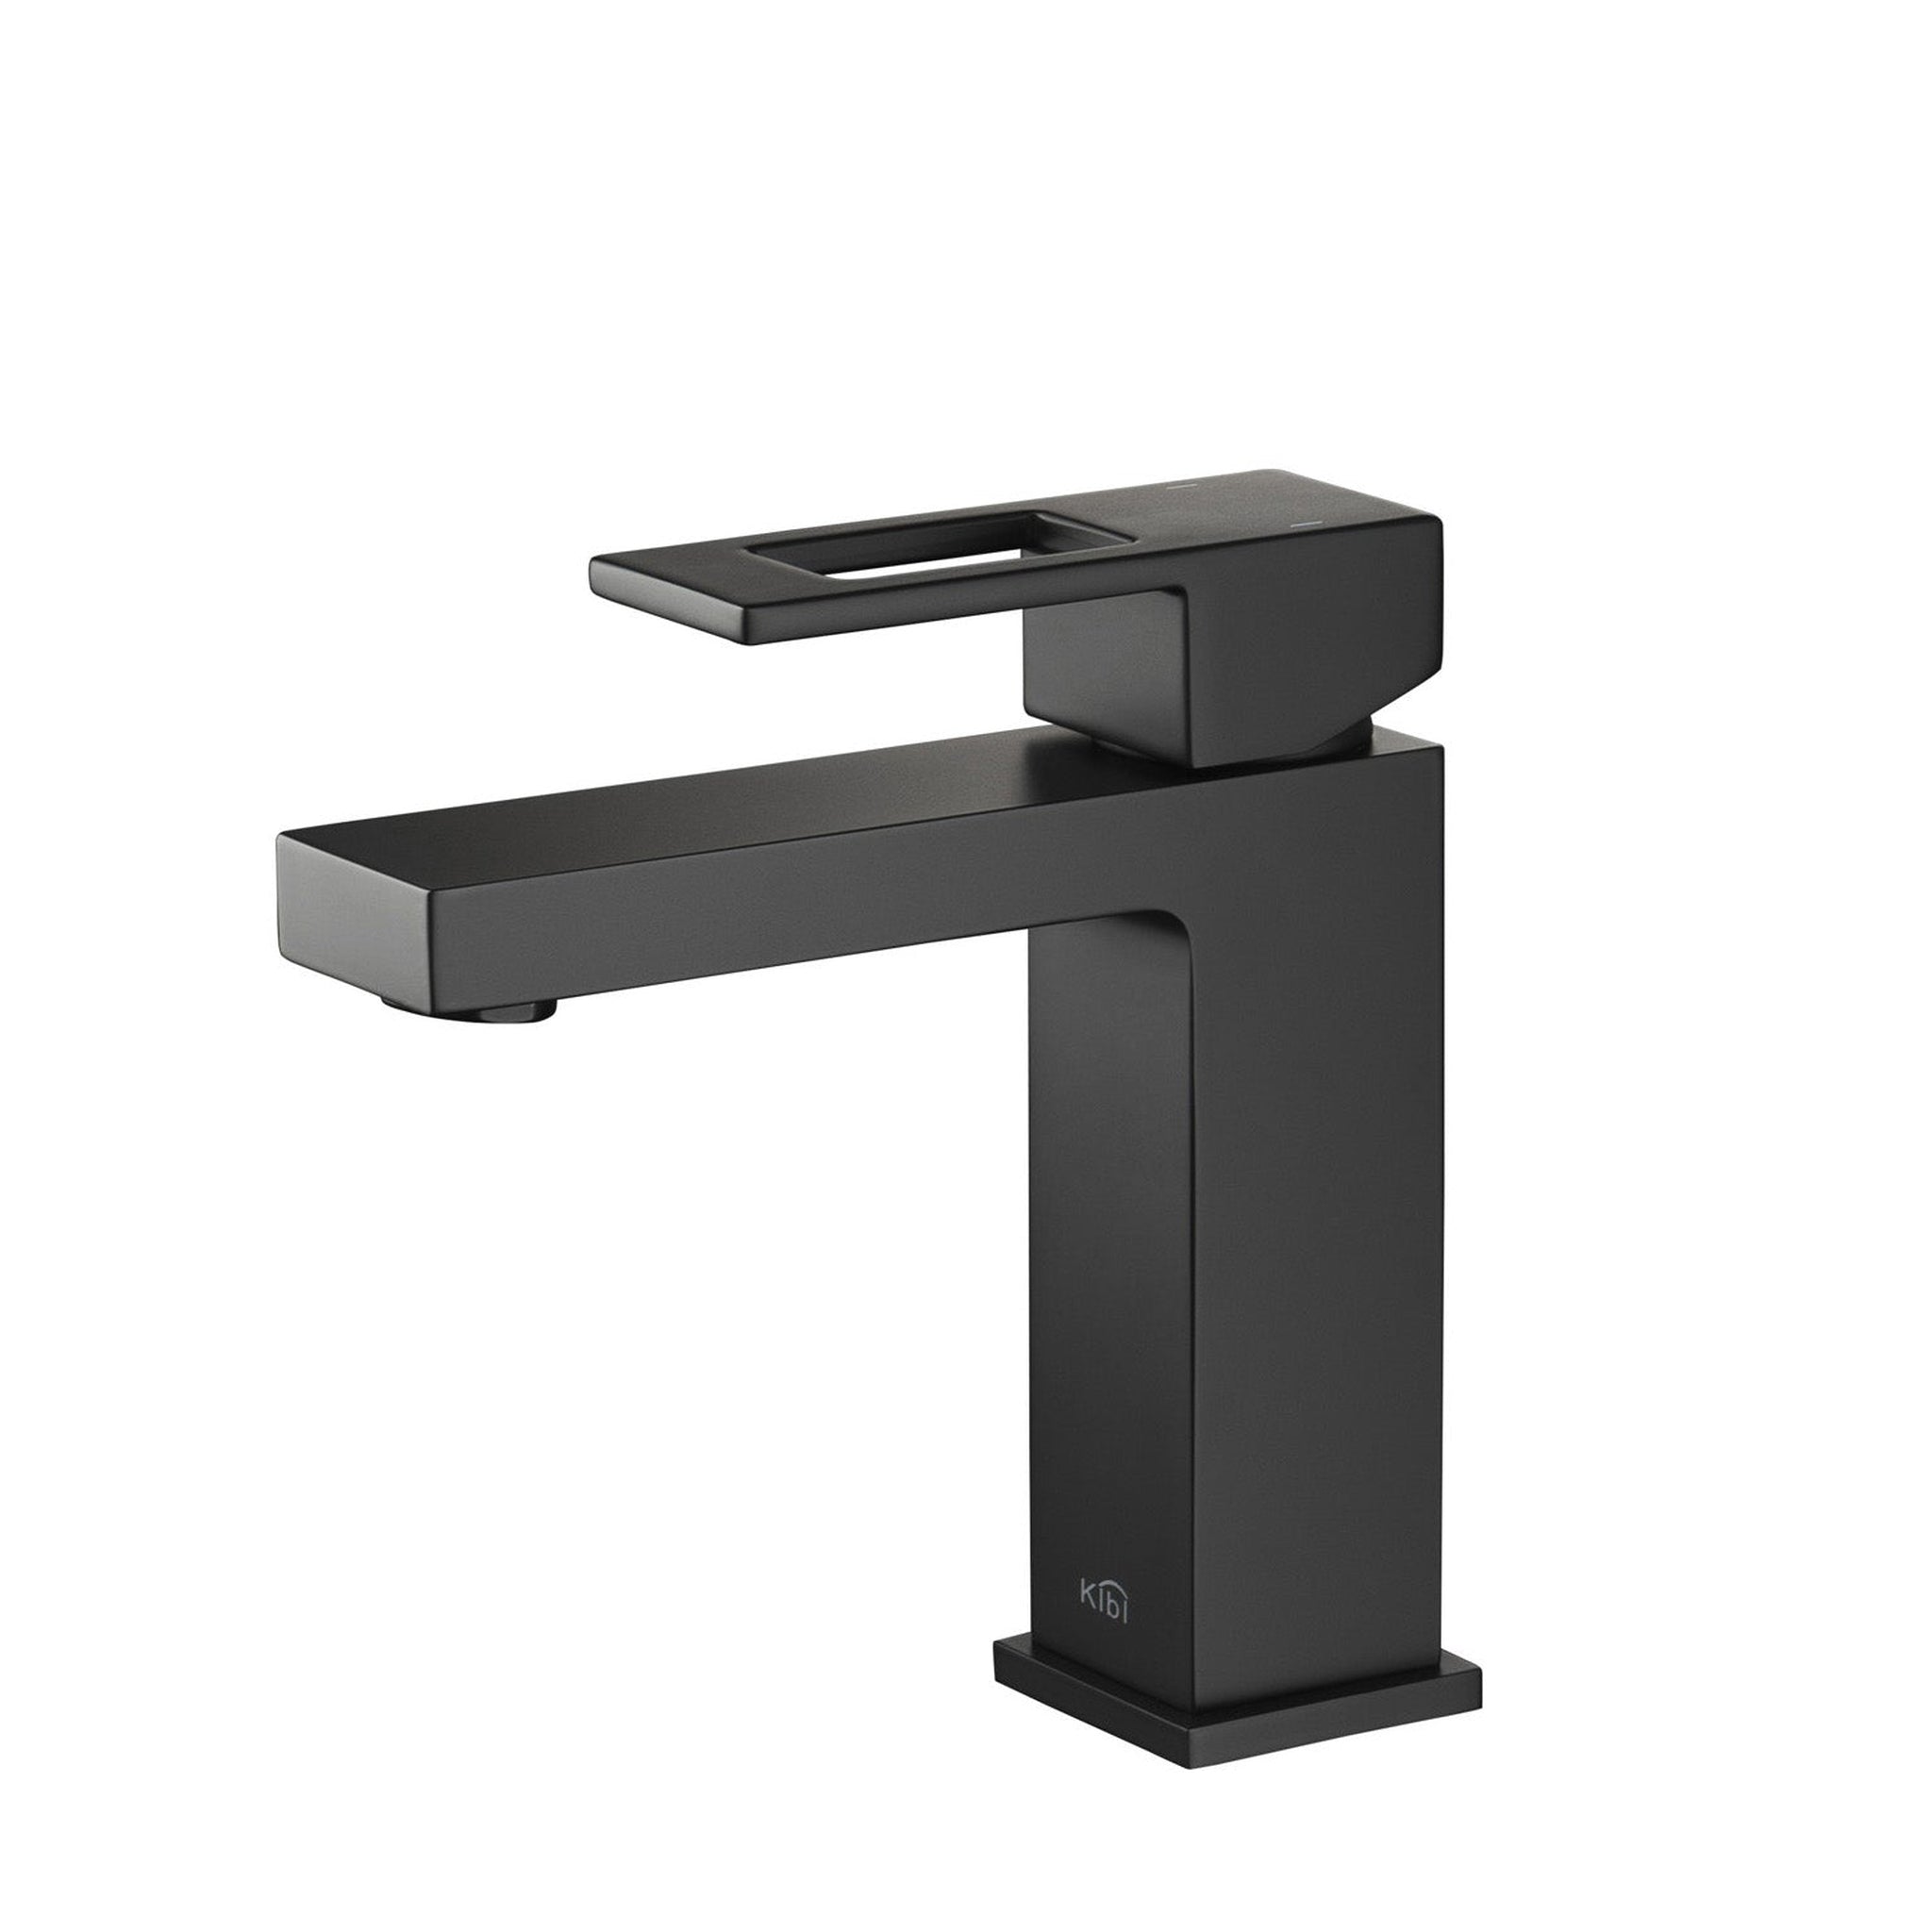 KIBI, KIBI Cubic Single Handle Matte Black Solid Brass Bathroom Vanity Sink Faucet